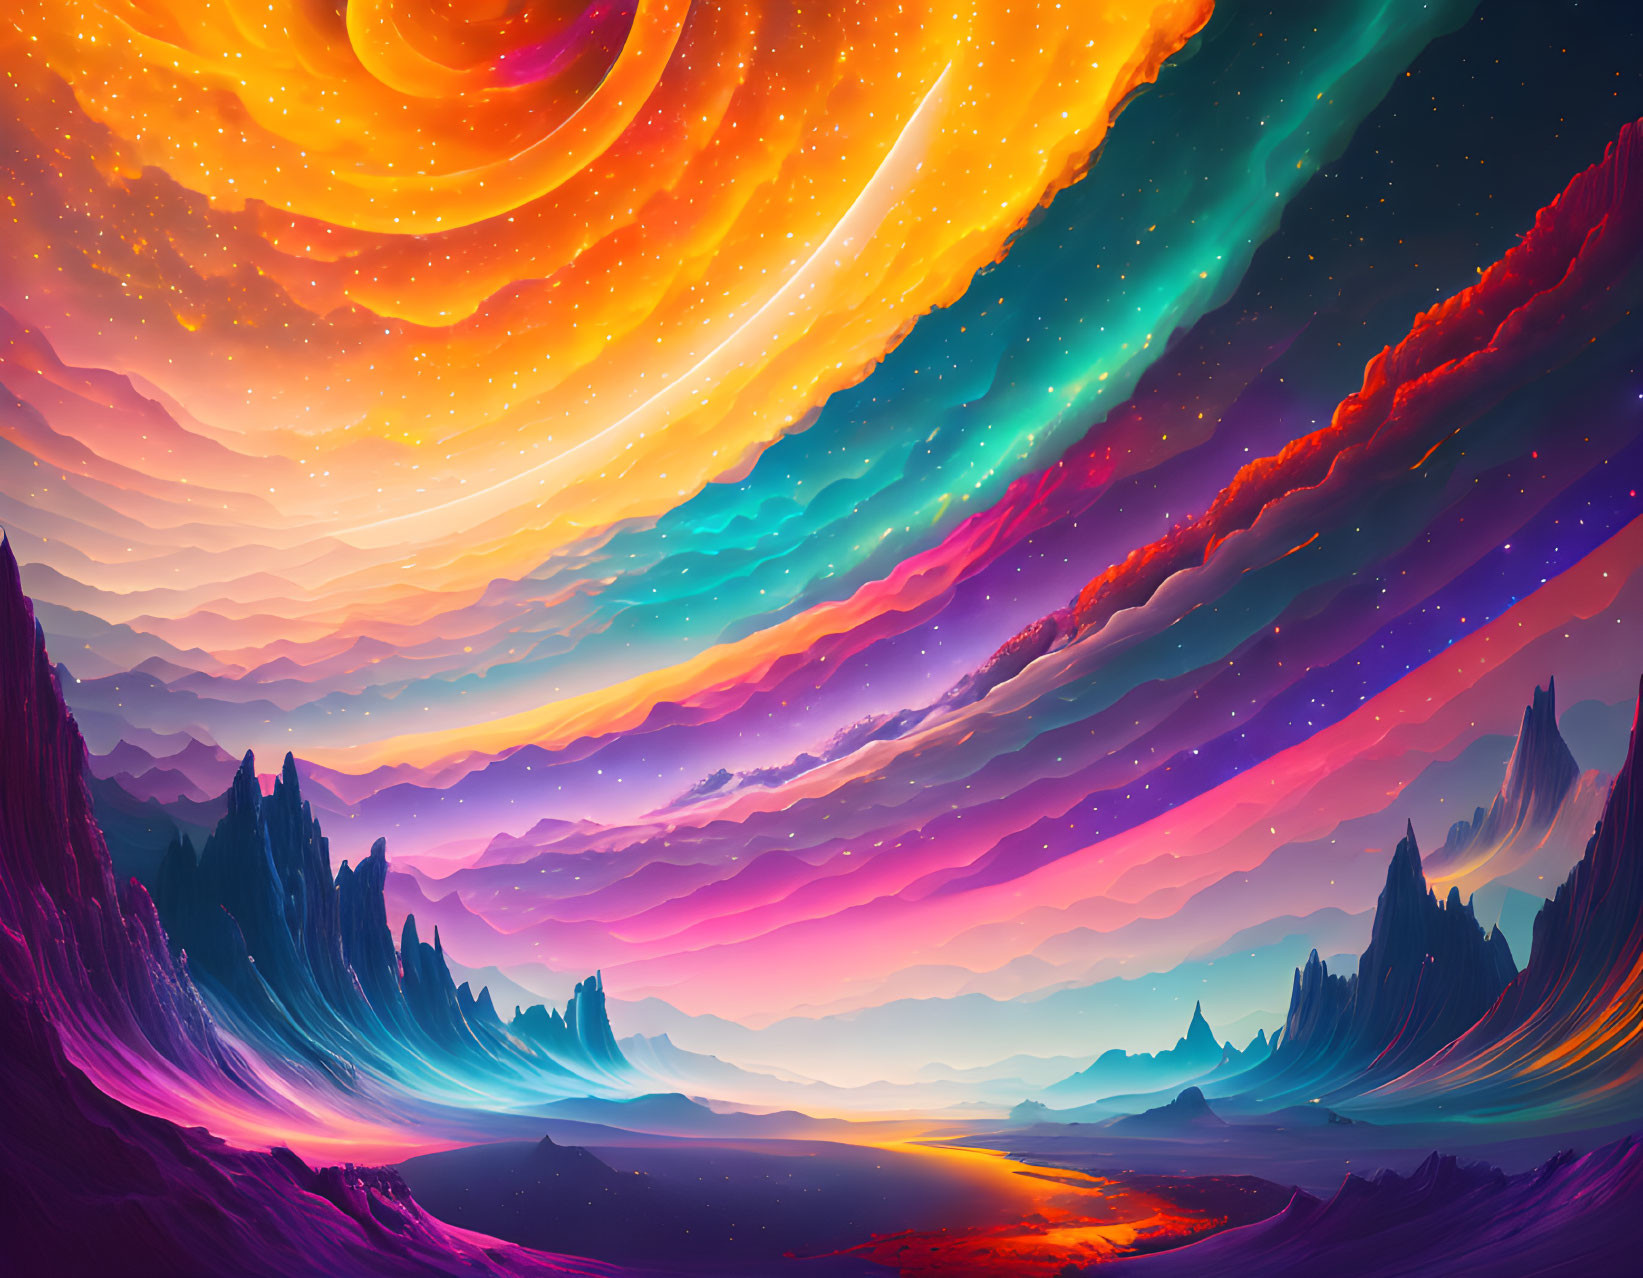 Colorful digital artwork: Otherworldly landscape with orange skies, cosmic mountains.